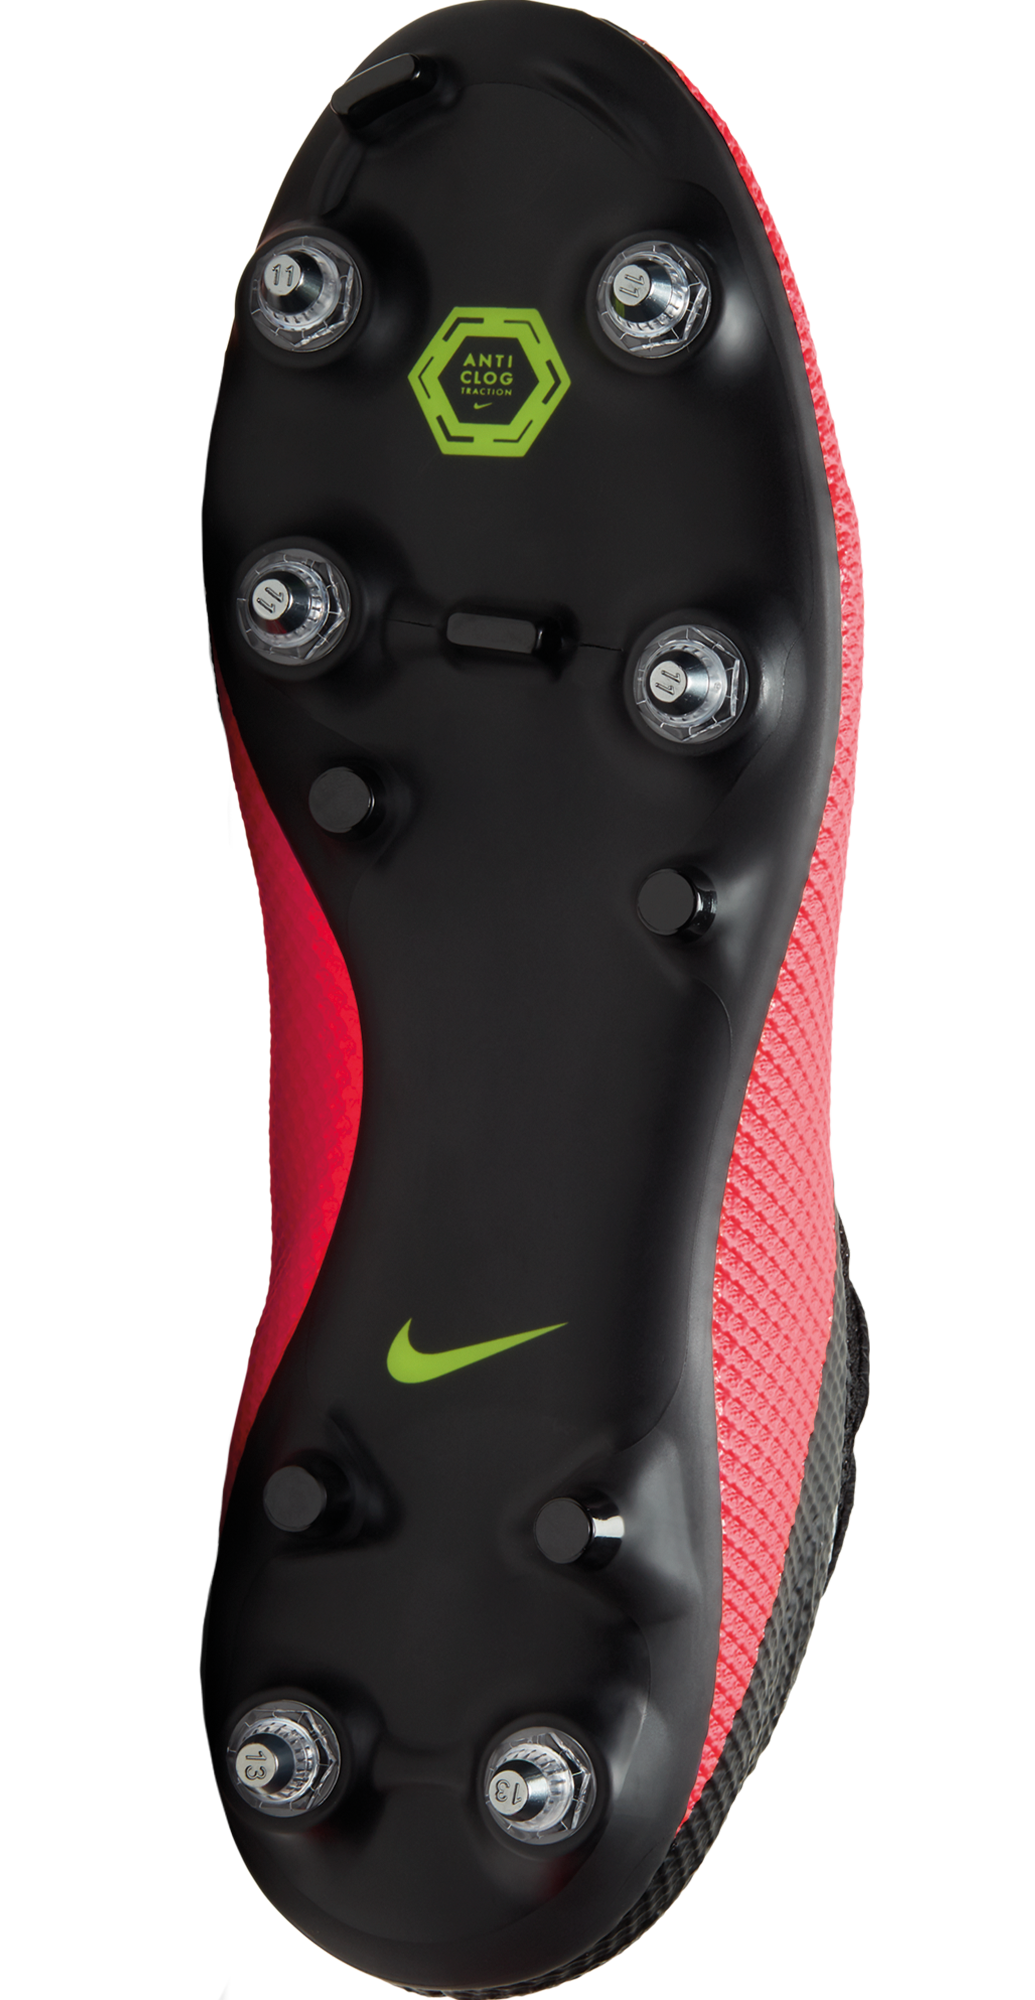 Nike x Jordan x PSG Phantom Vision Boots Revealed